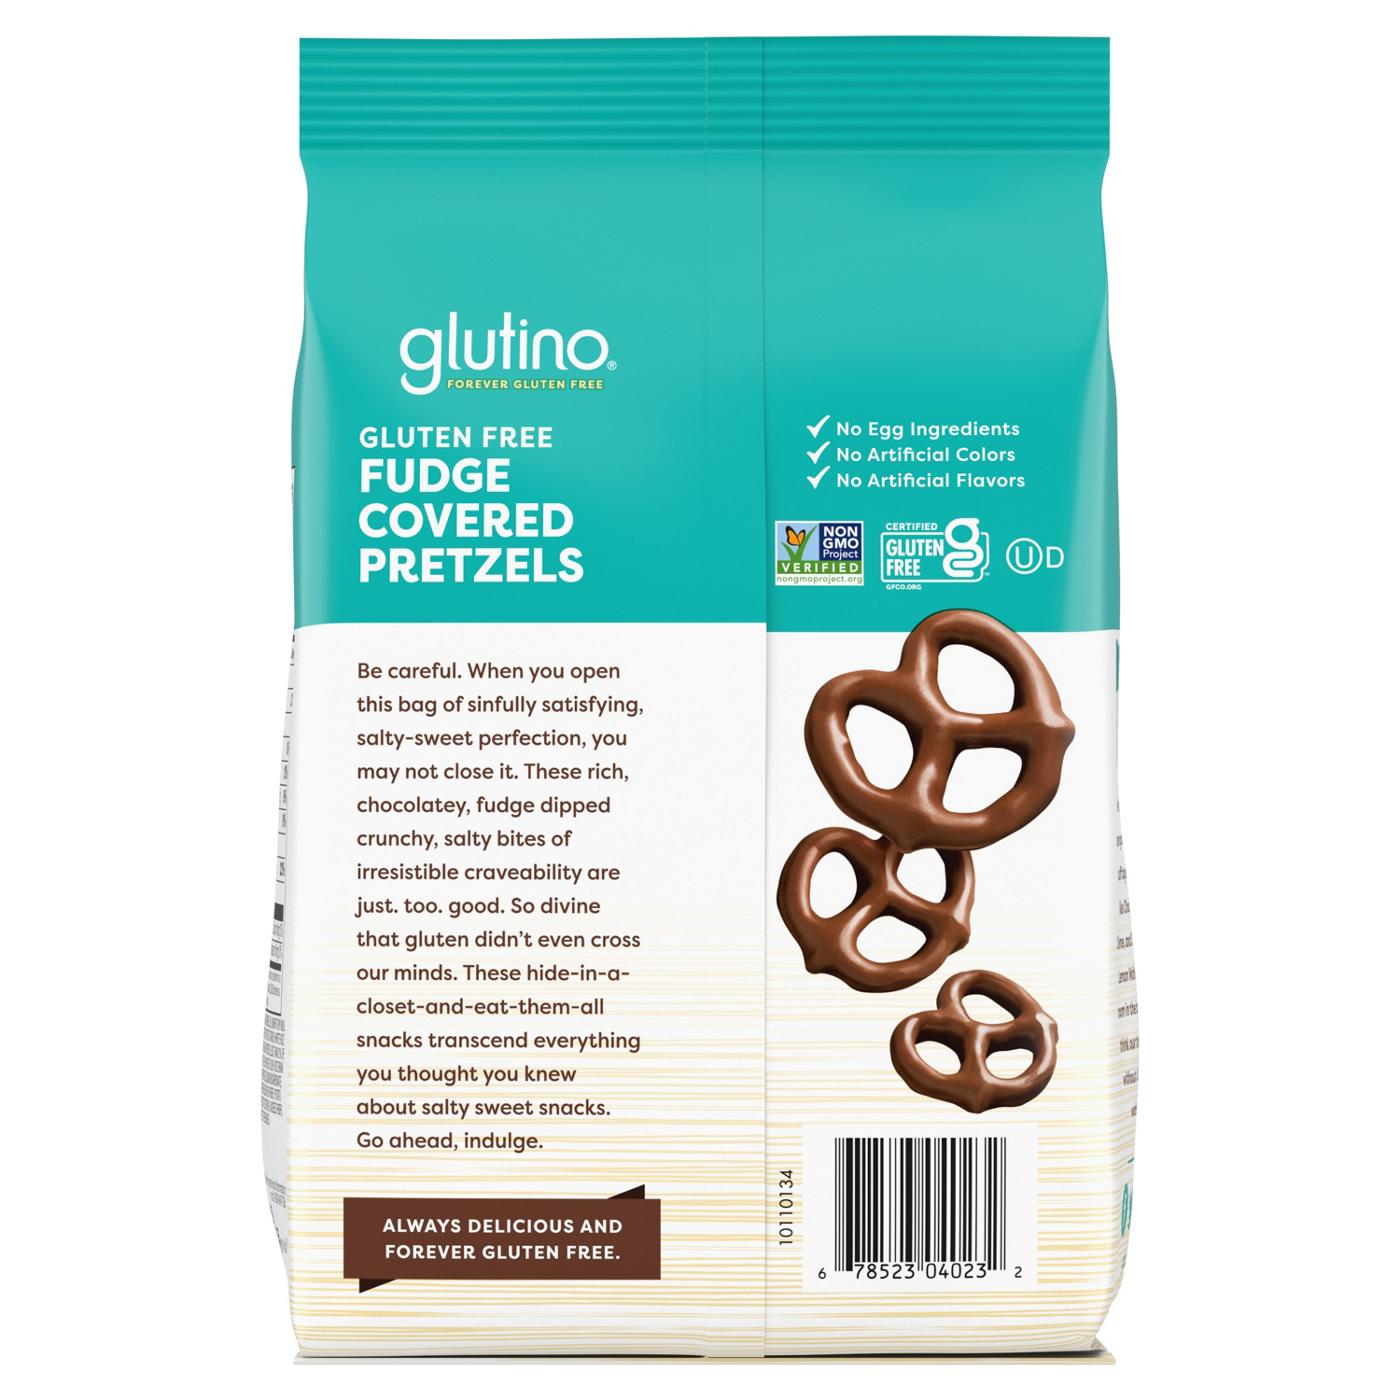 Glutino Gluten Free Fudge Covered Pretzels; image 3 of 4